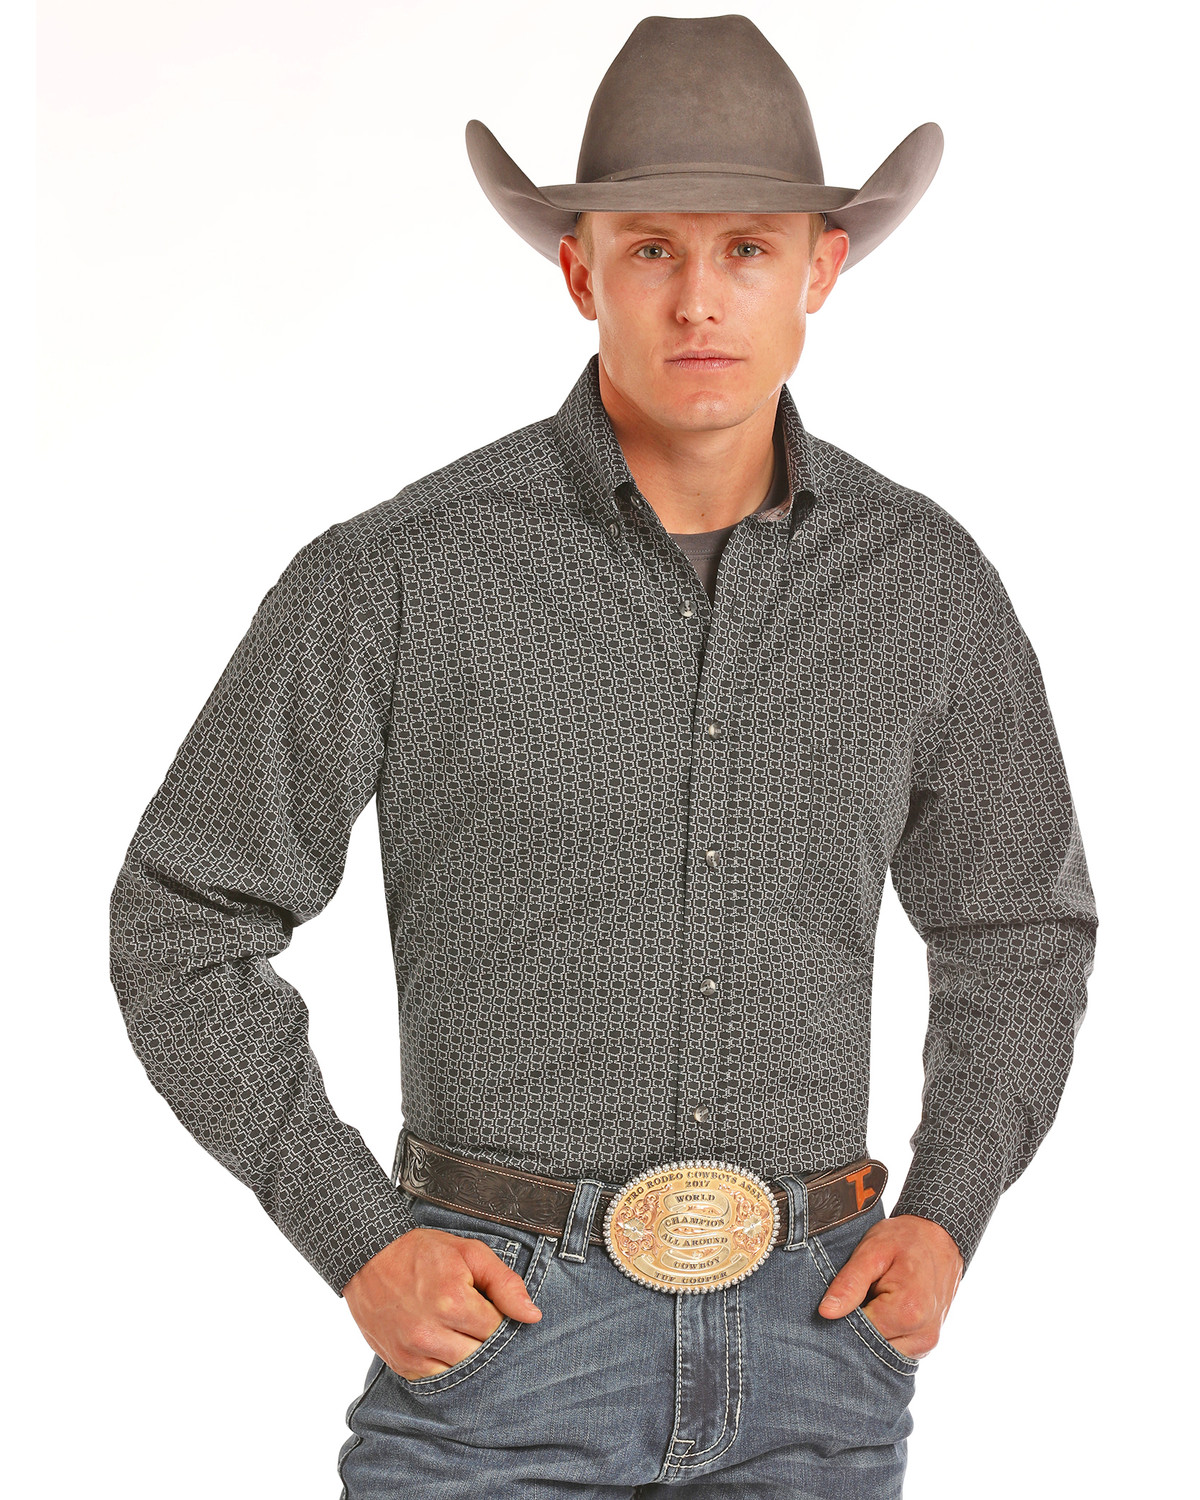 tuf cooper cowboy hats